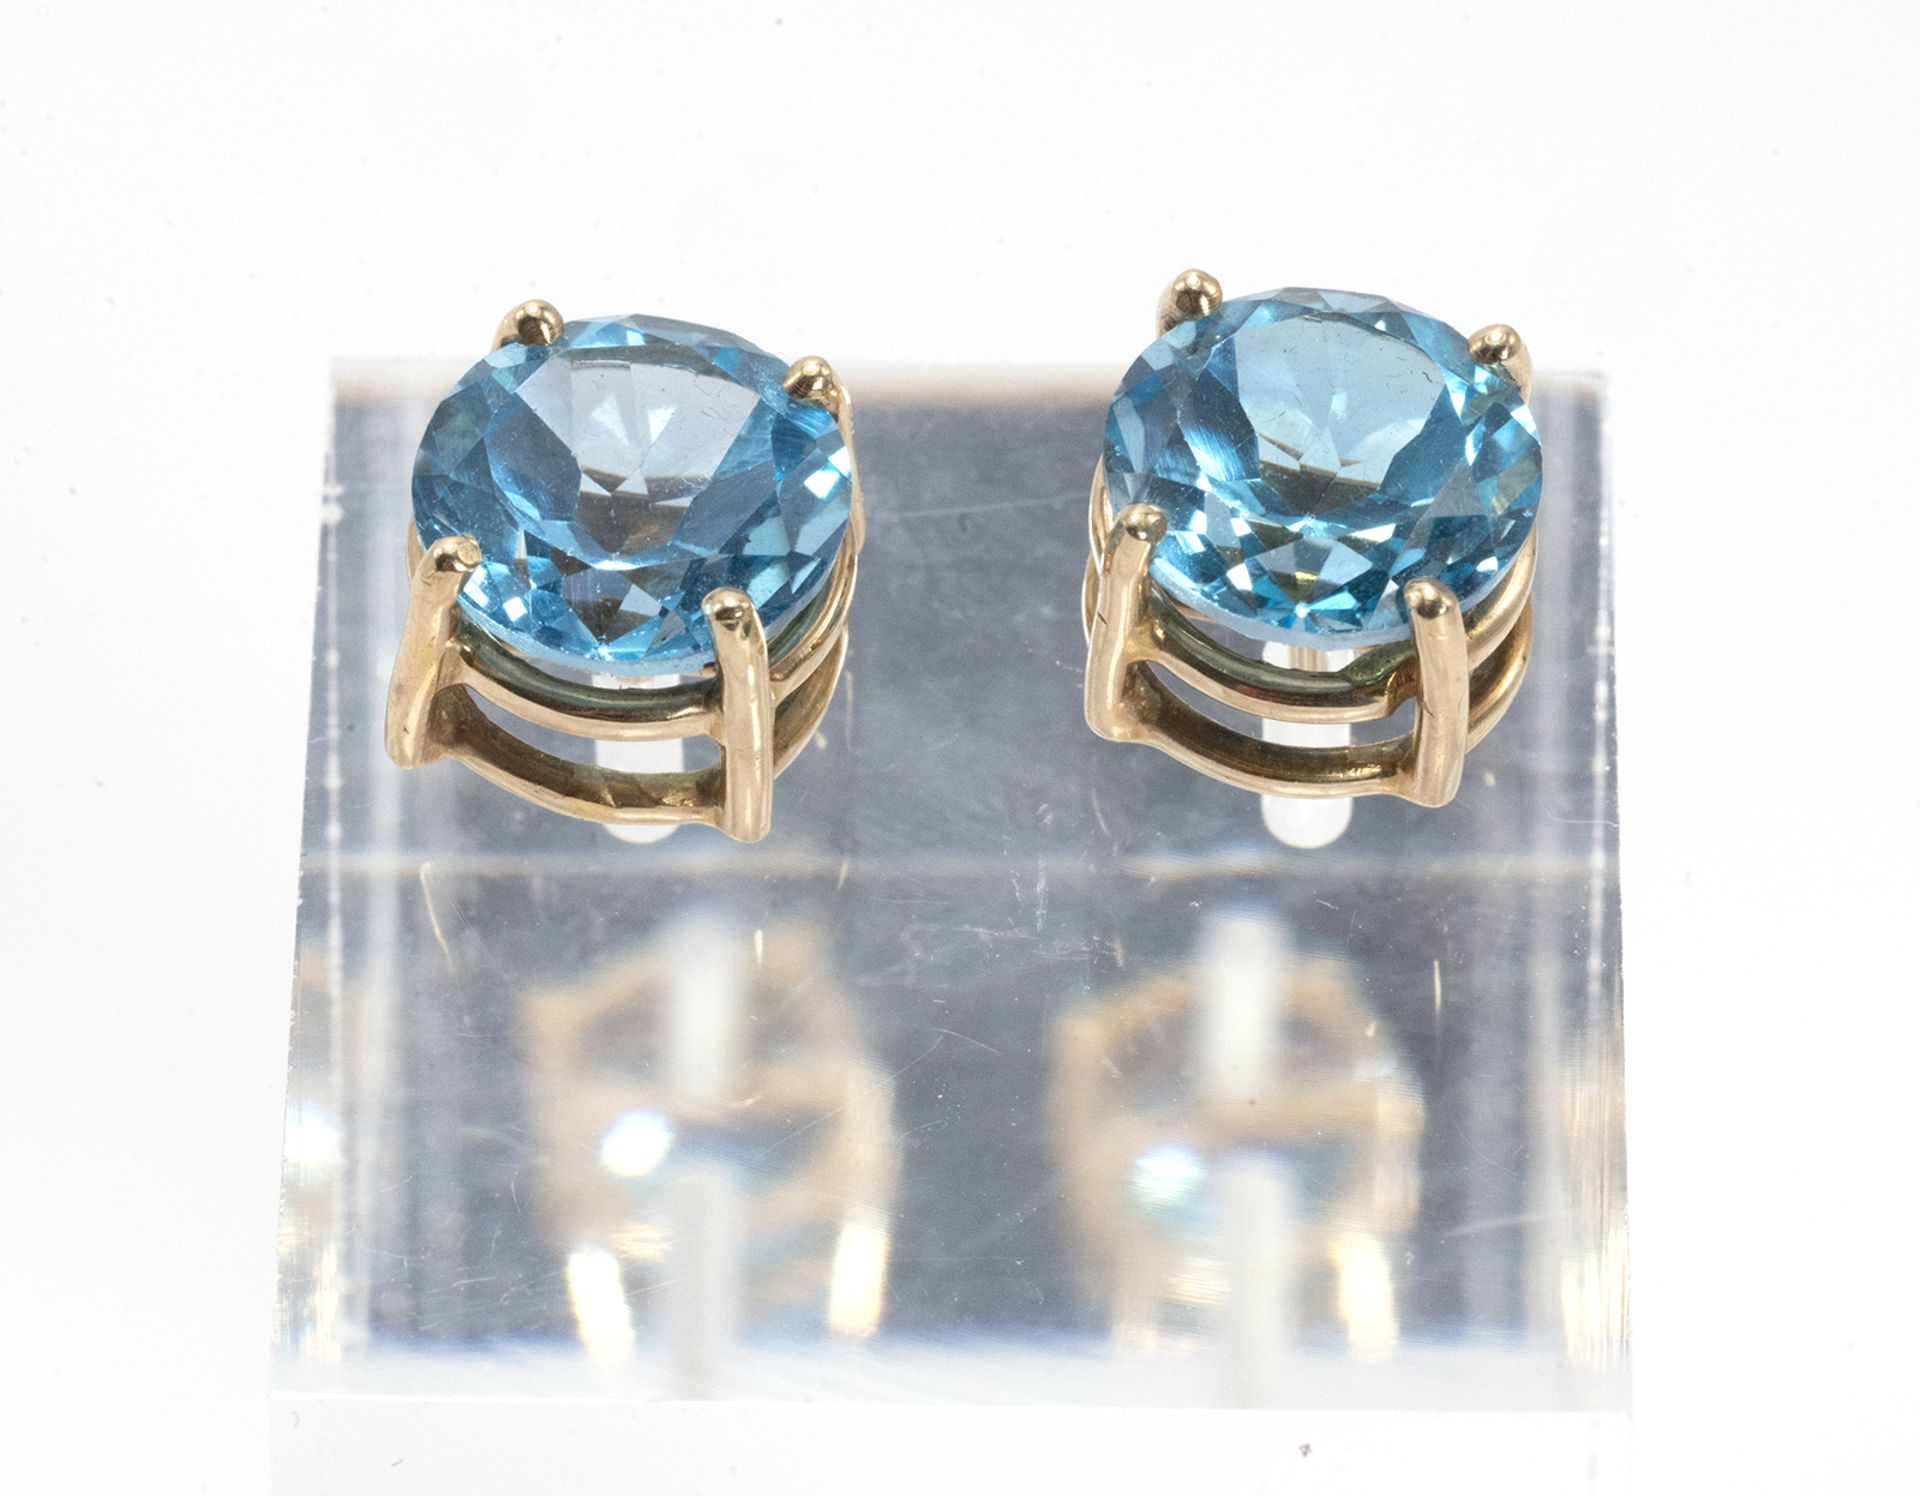 Topaz sleeper earrings - Image 2 of 3